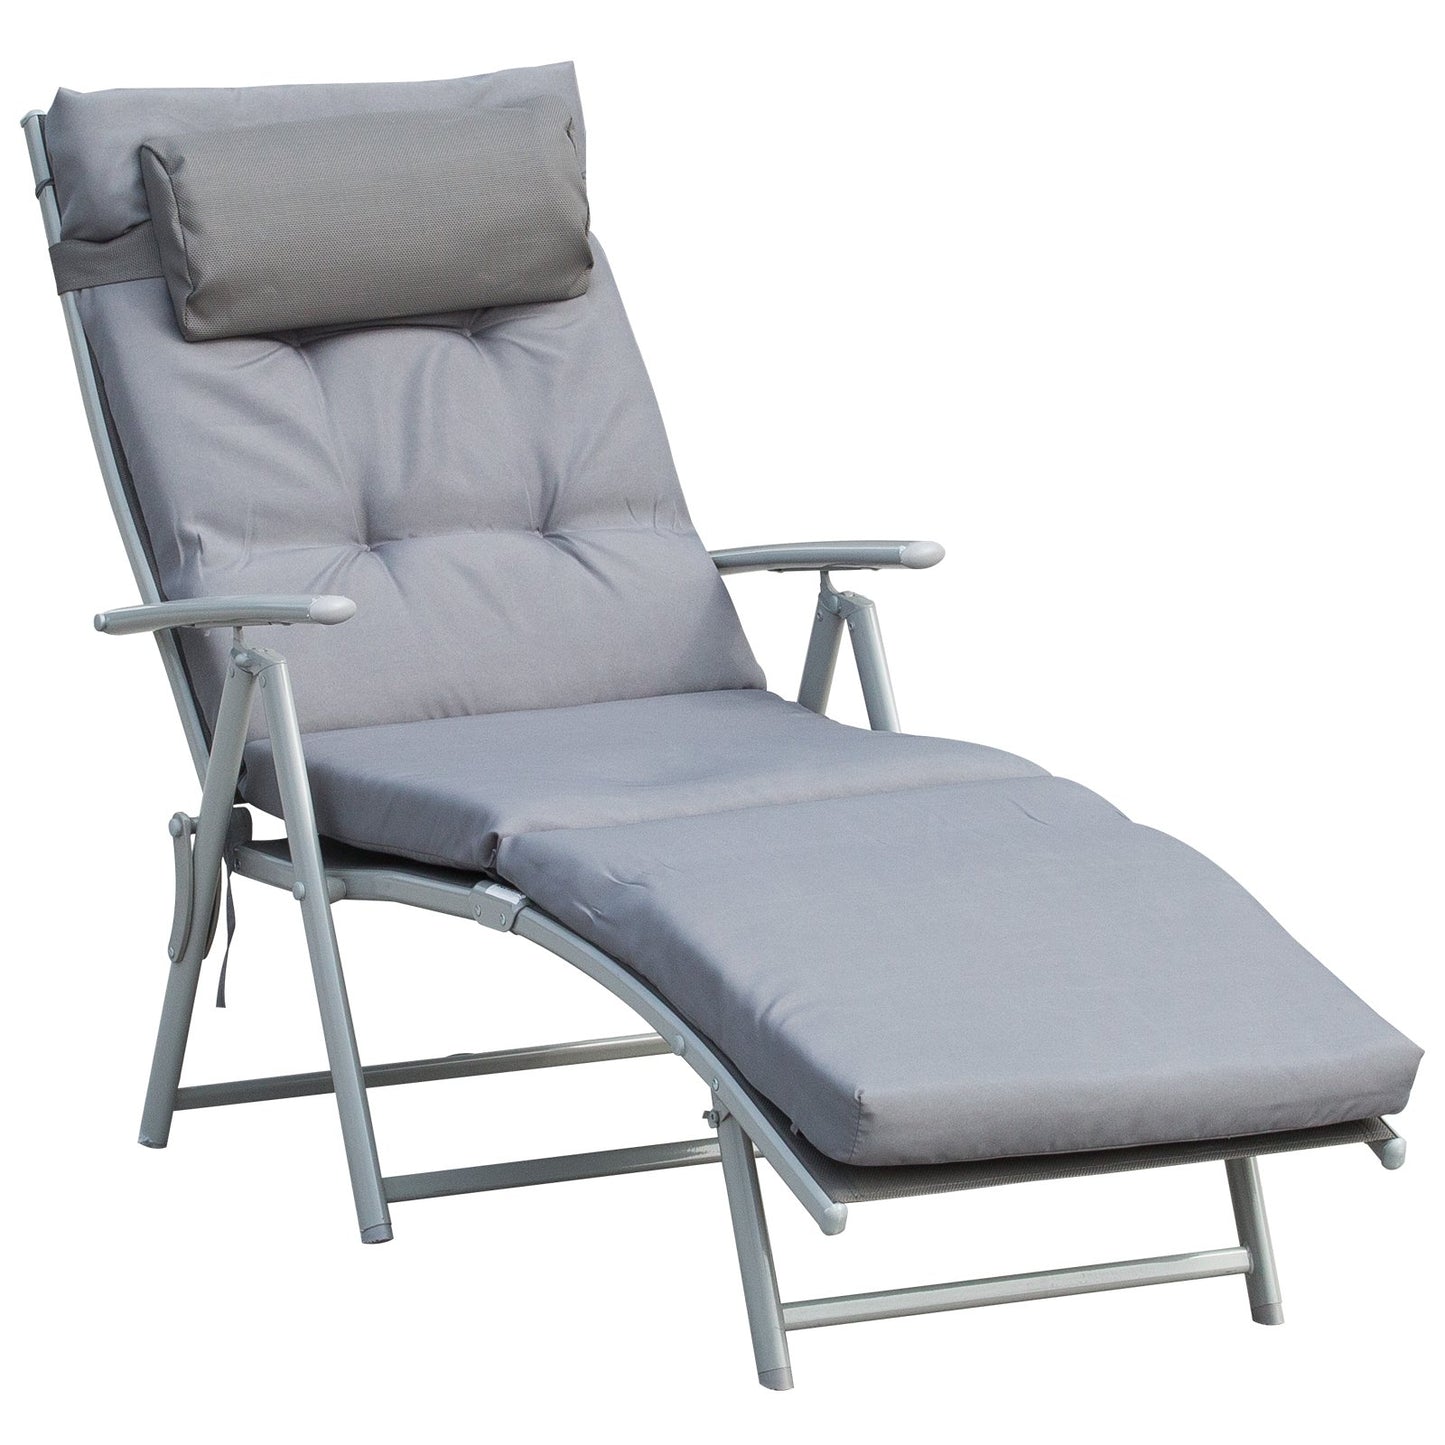 Folding Chaise Lounge Chair Adjustable Pool Beach Sun Lounger w/ Cushion Pillow